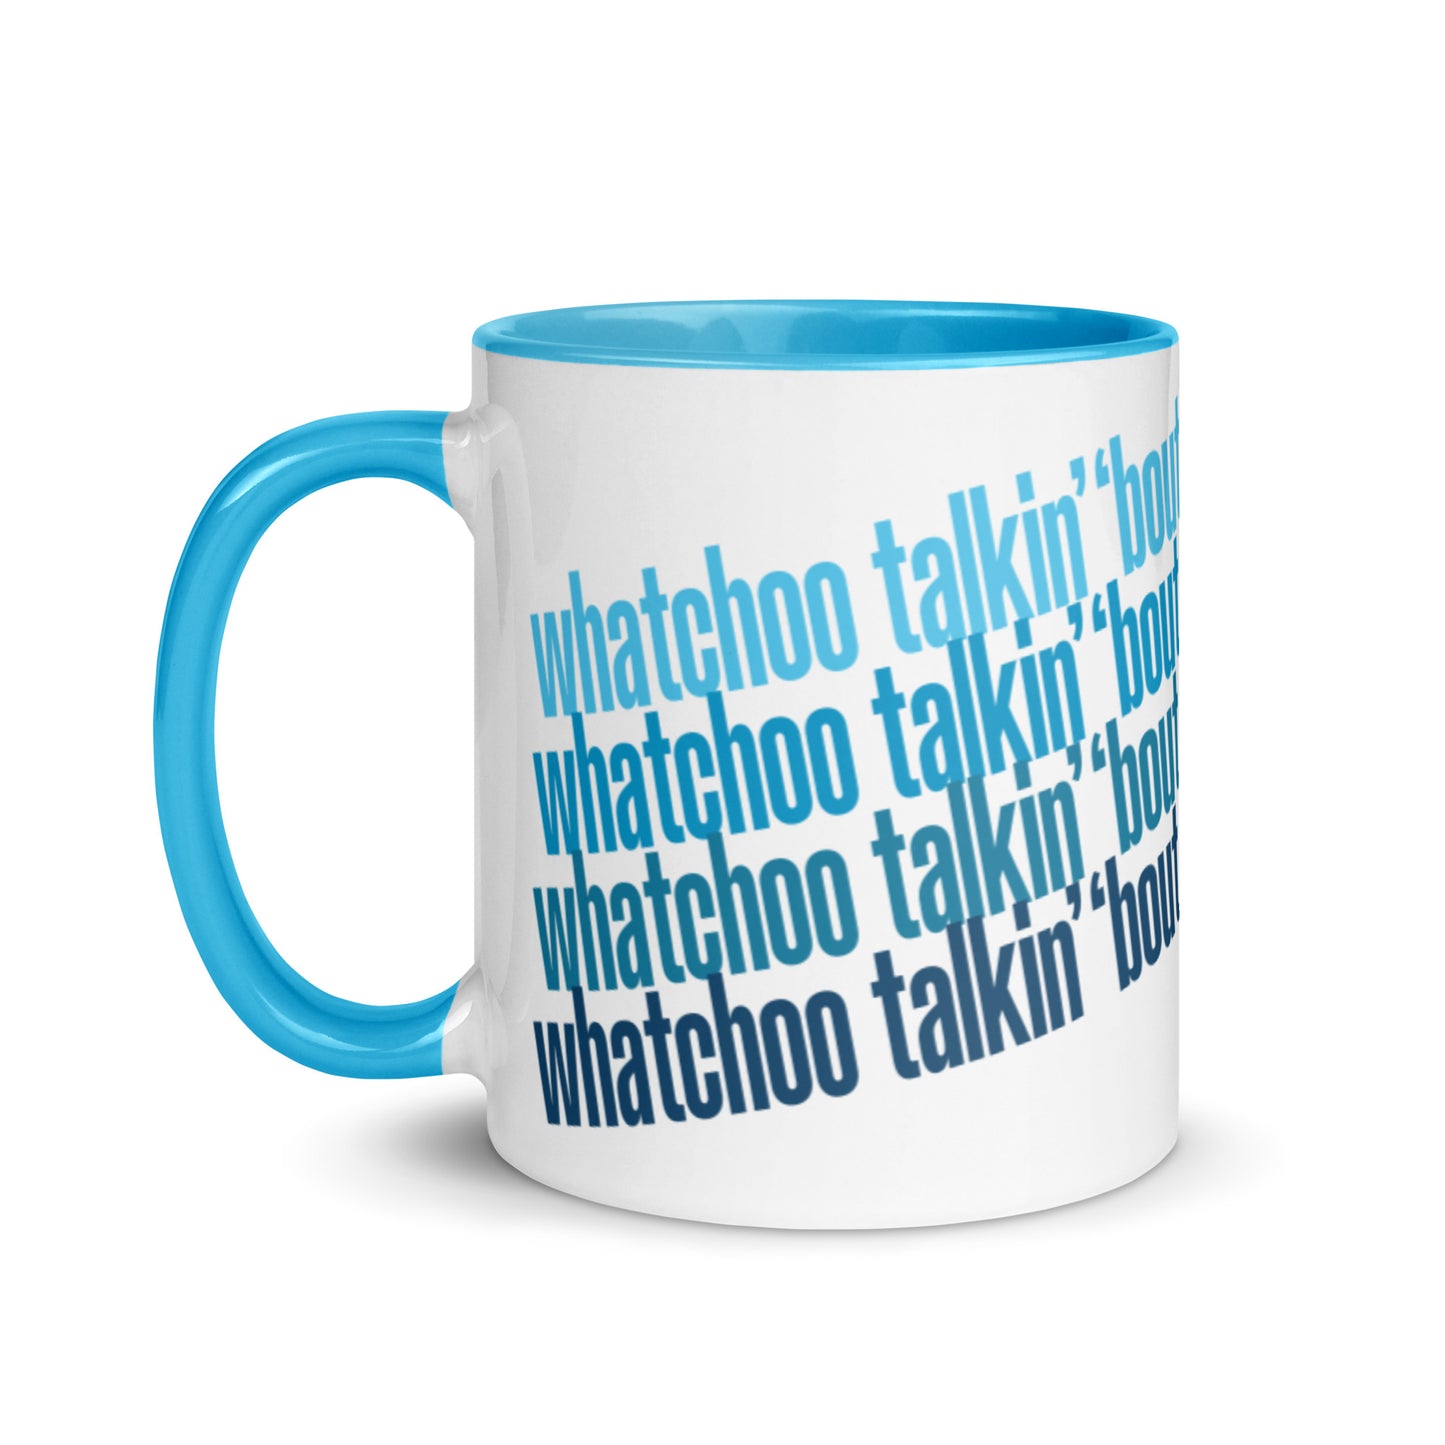 "Whatchoo Talkin Bout" Retro Blue Pattern Mug